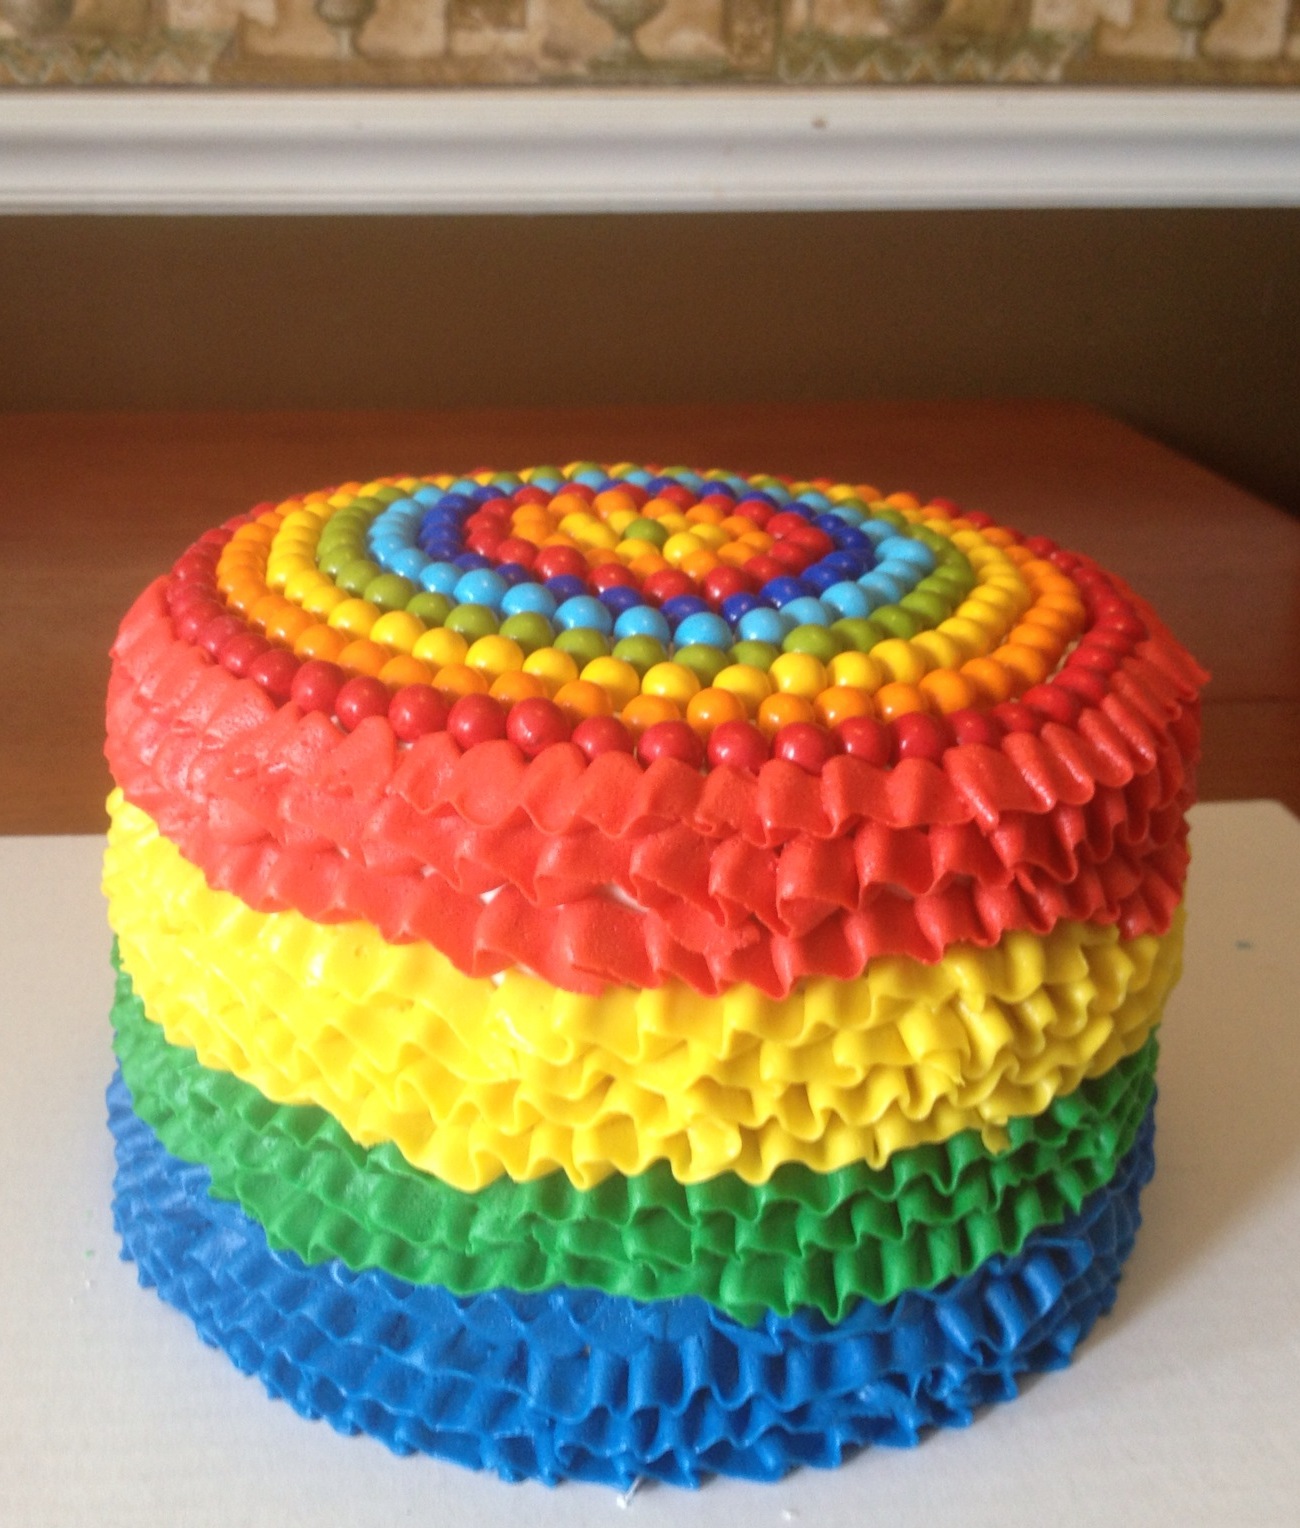 RBC017 - Flower Rainbow Cake